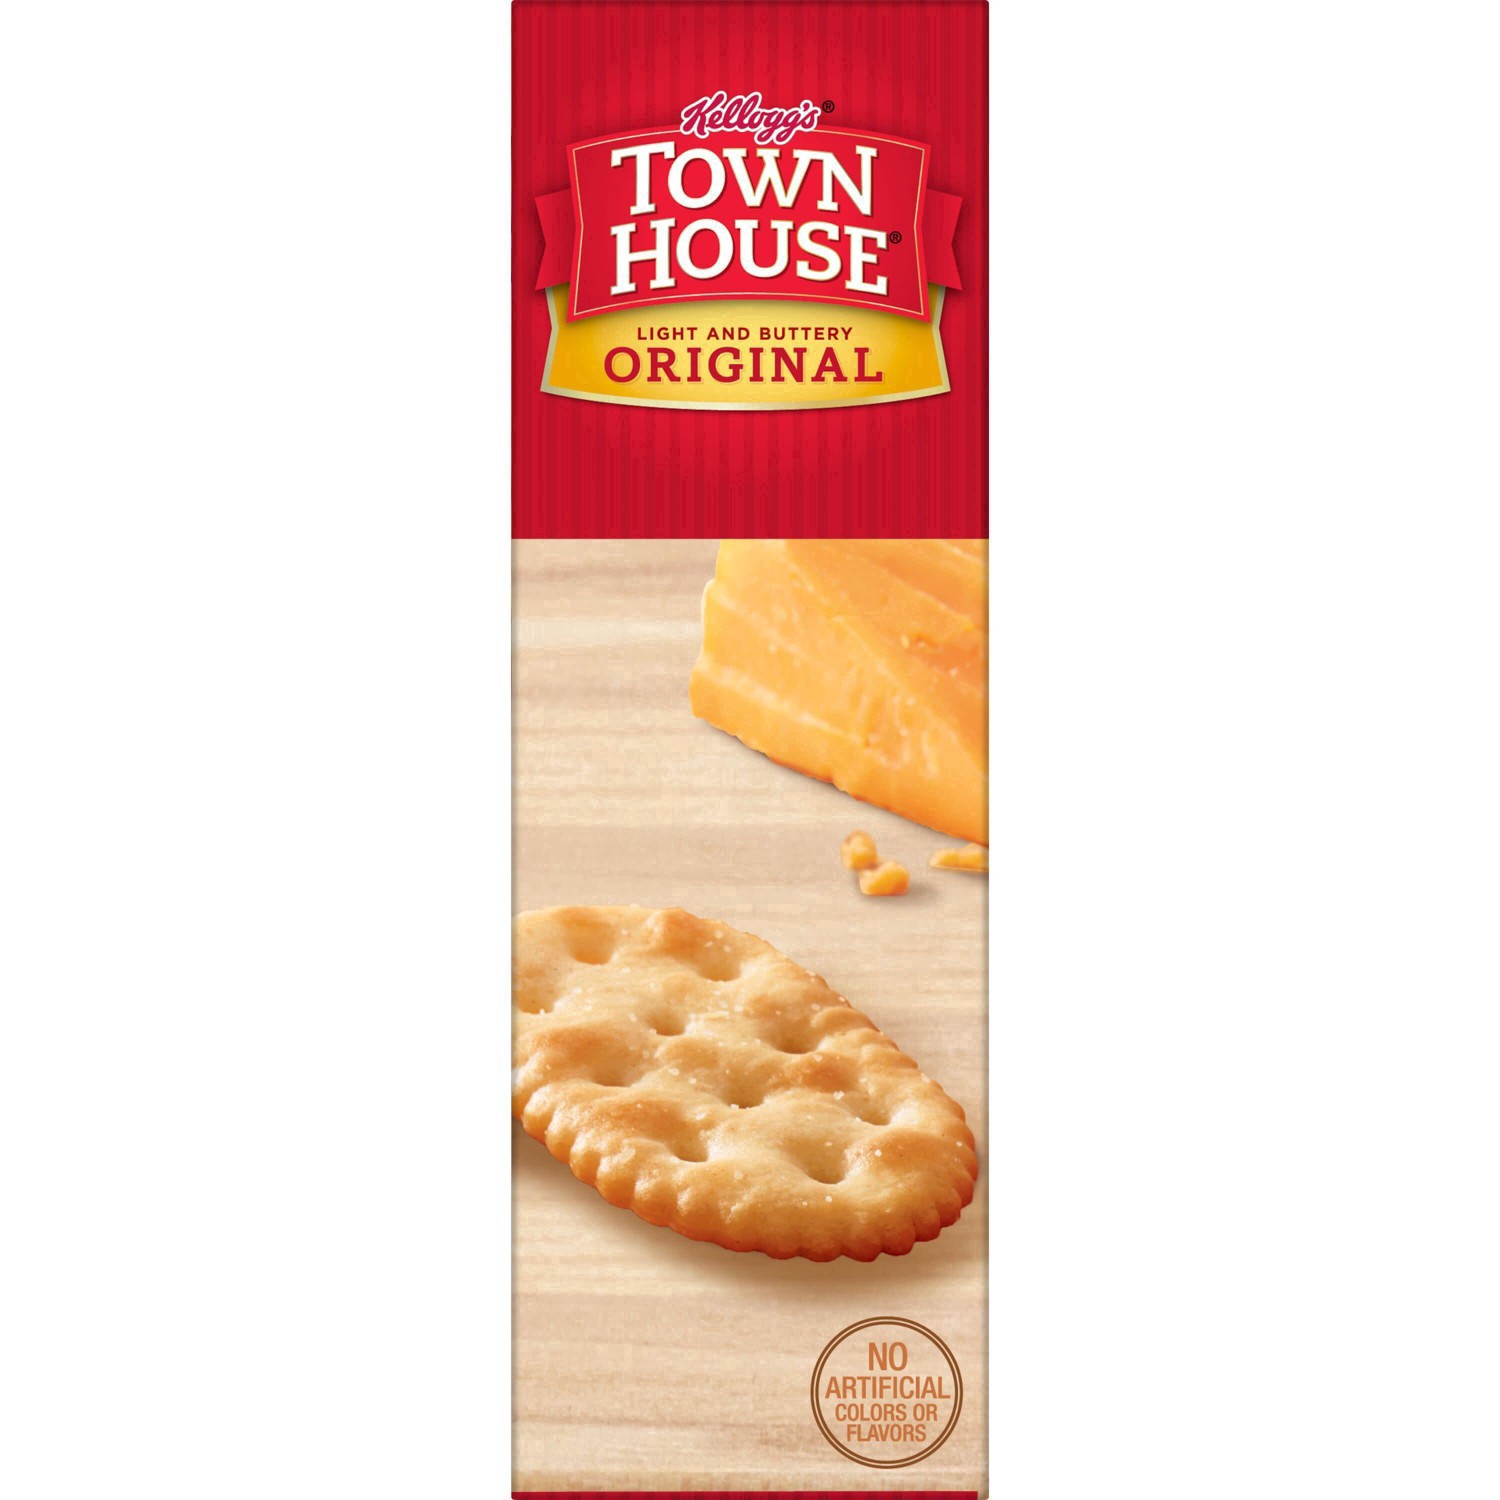 slide 65 of 101, Town House Kellogg's Town House Original Snack Crackers - 13.8oz, 13.8 oz